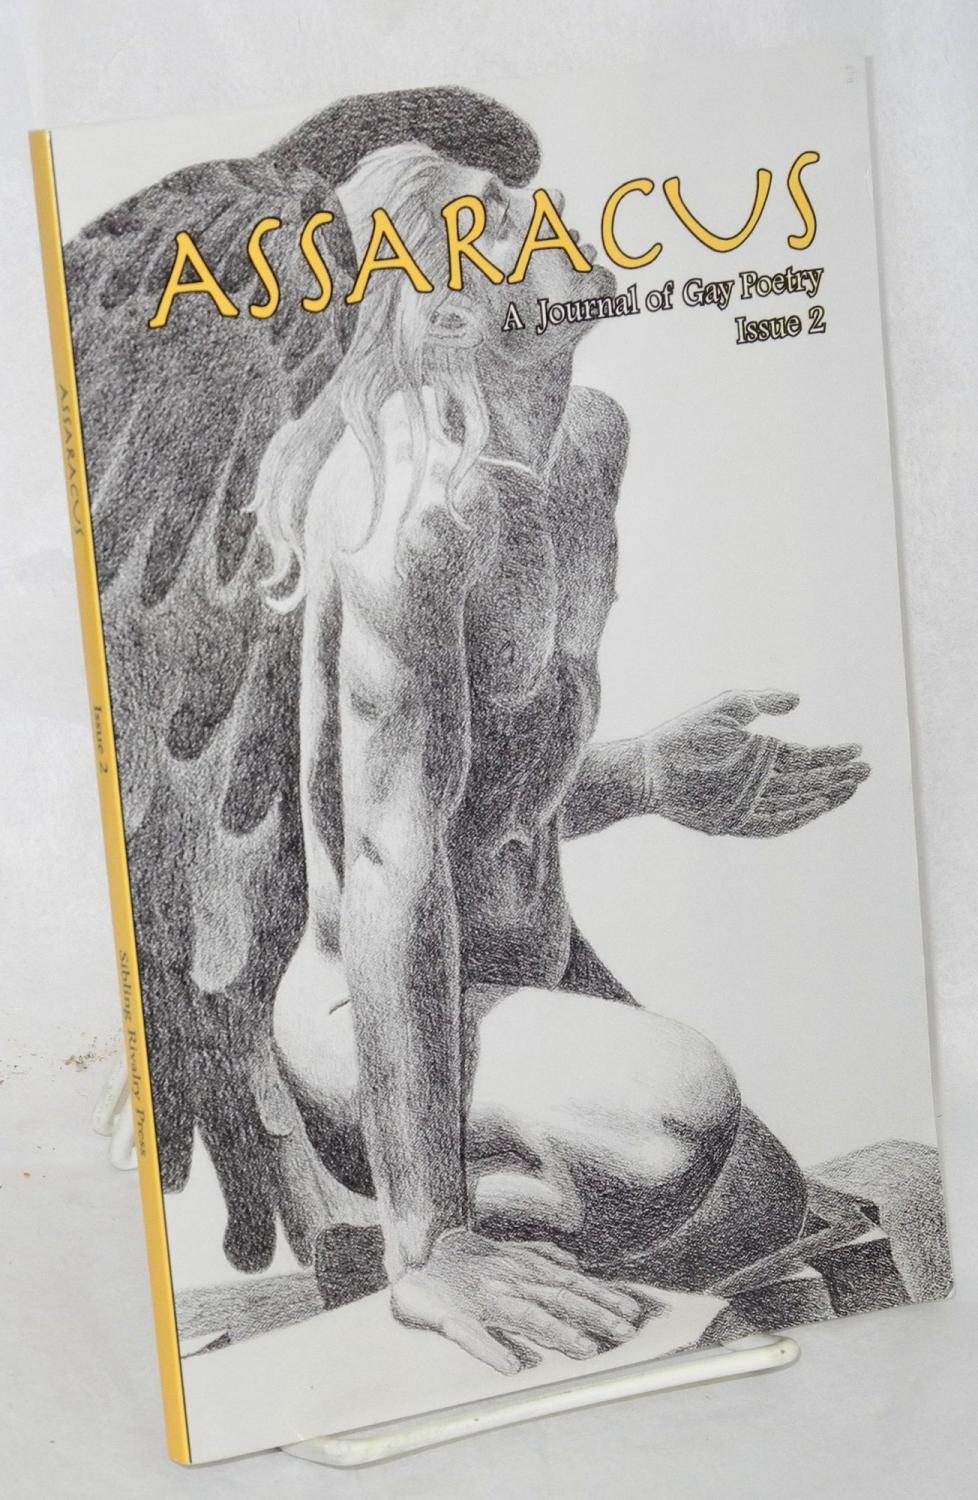 Assaracus: a journal of gay poetry issue 2 - Borland, Bryan, editor, Wonder Dave, Robert Mohring, Sam Sax, et al.